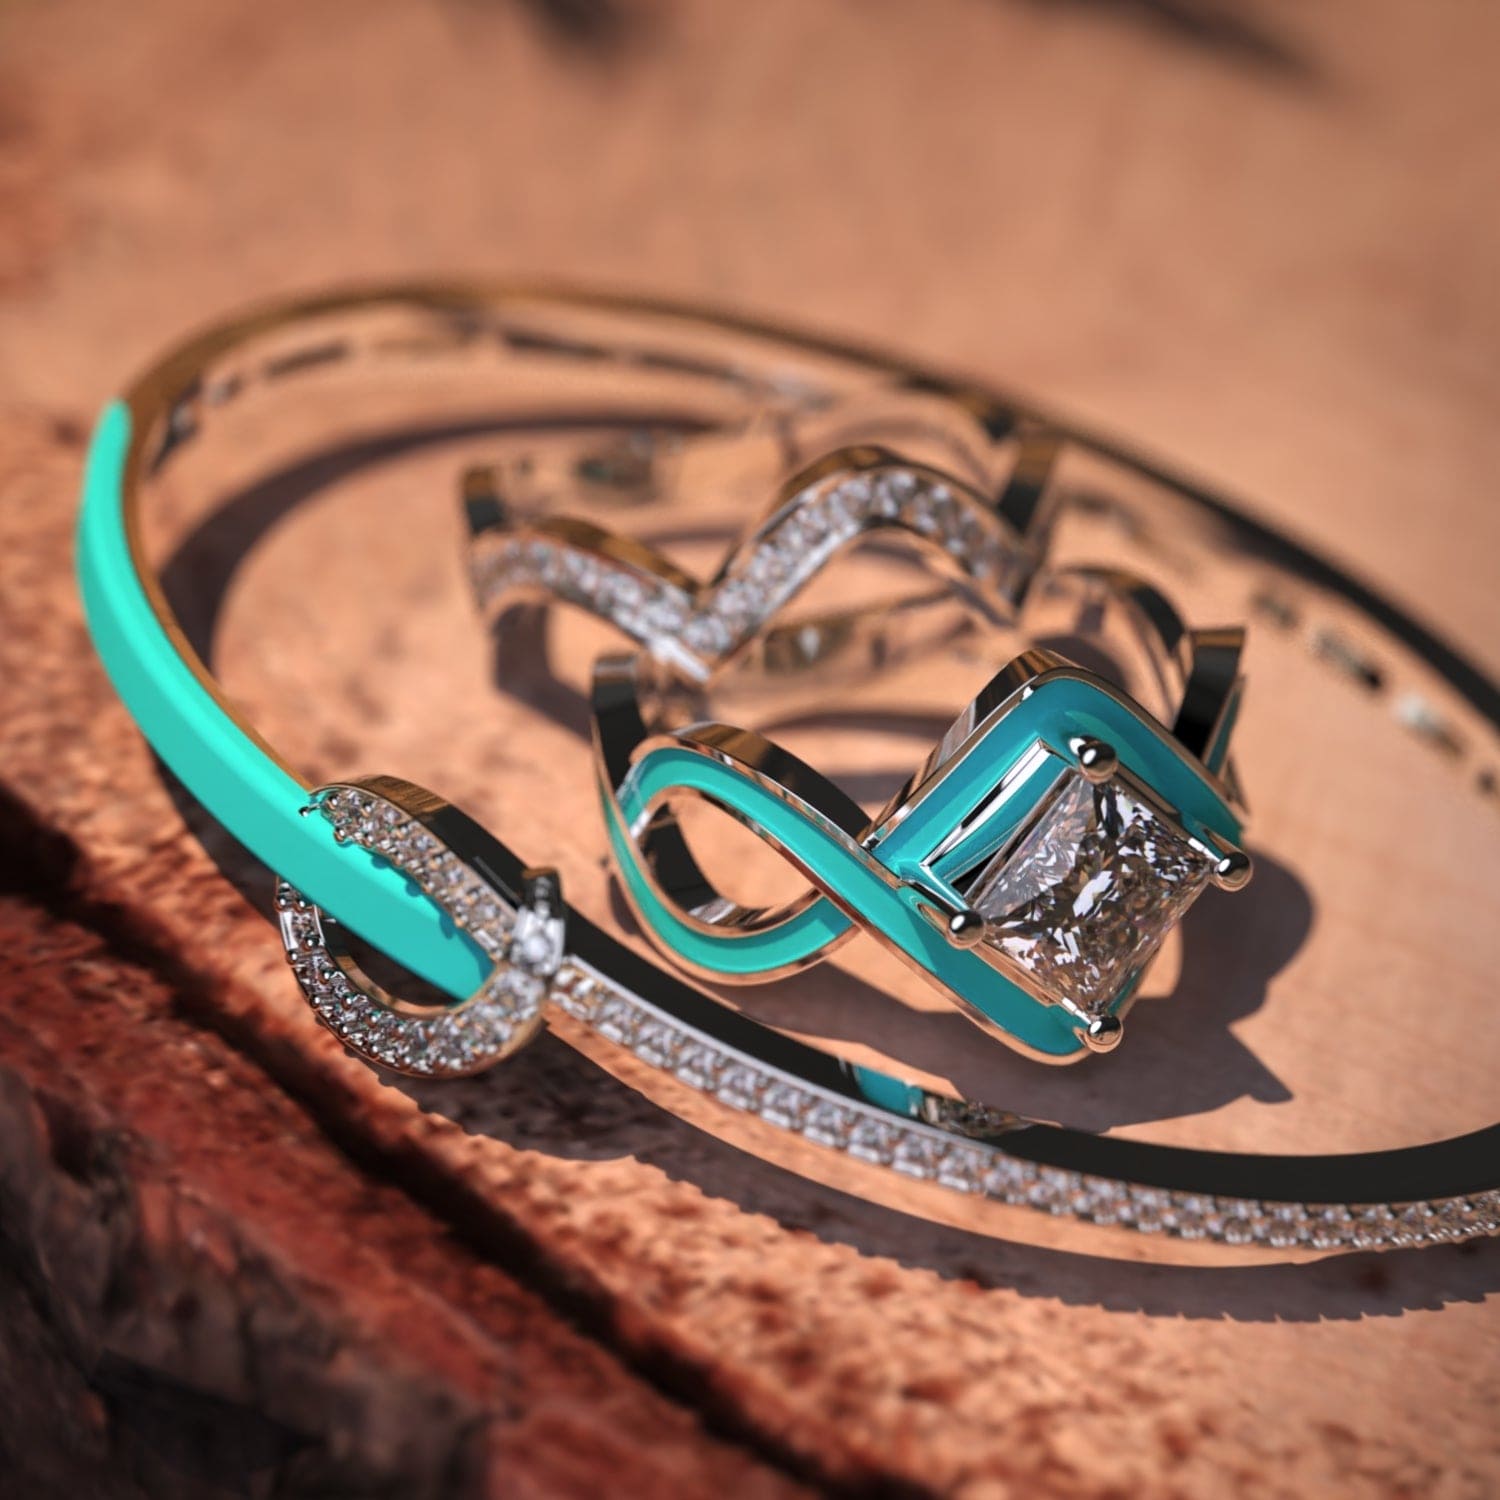 The Ocean Wave: 2-Piece Ring & Bracelet Set - S925 Sterling Silver